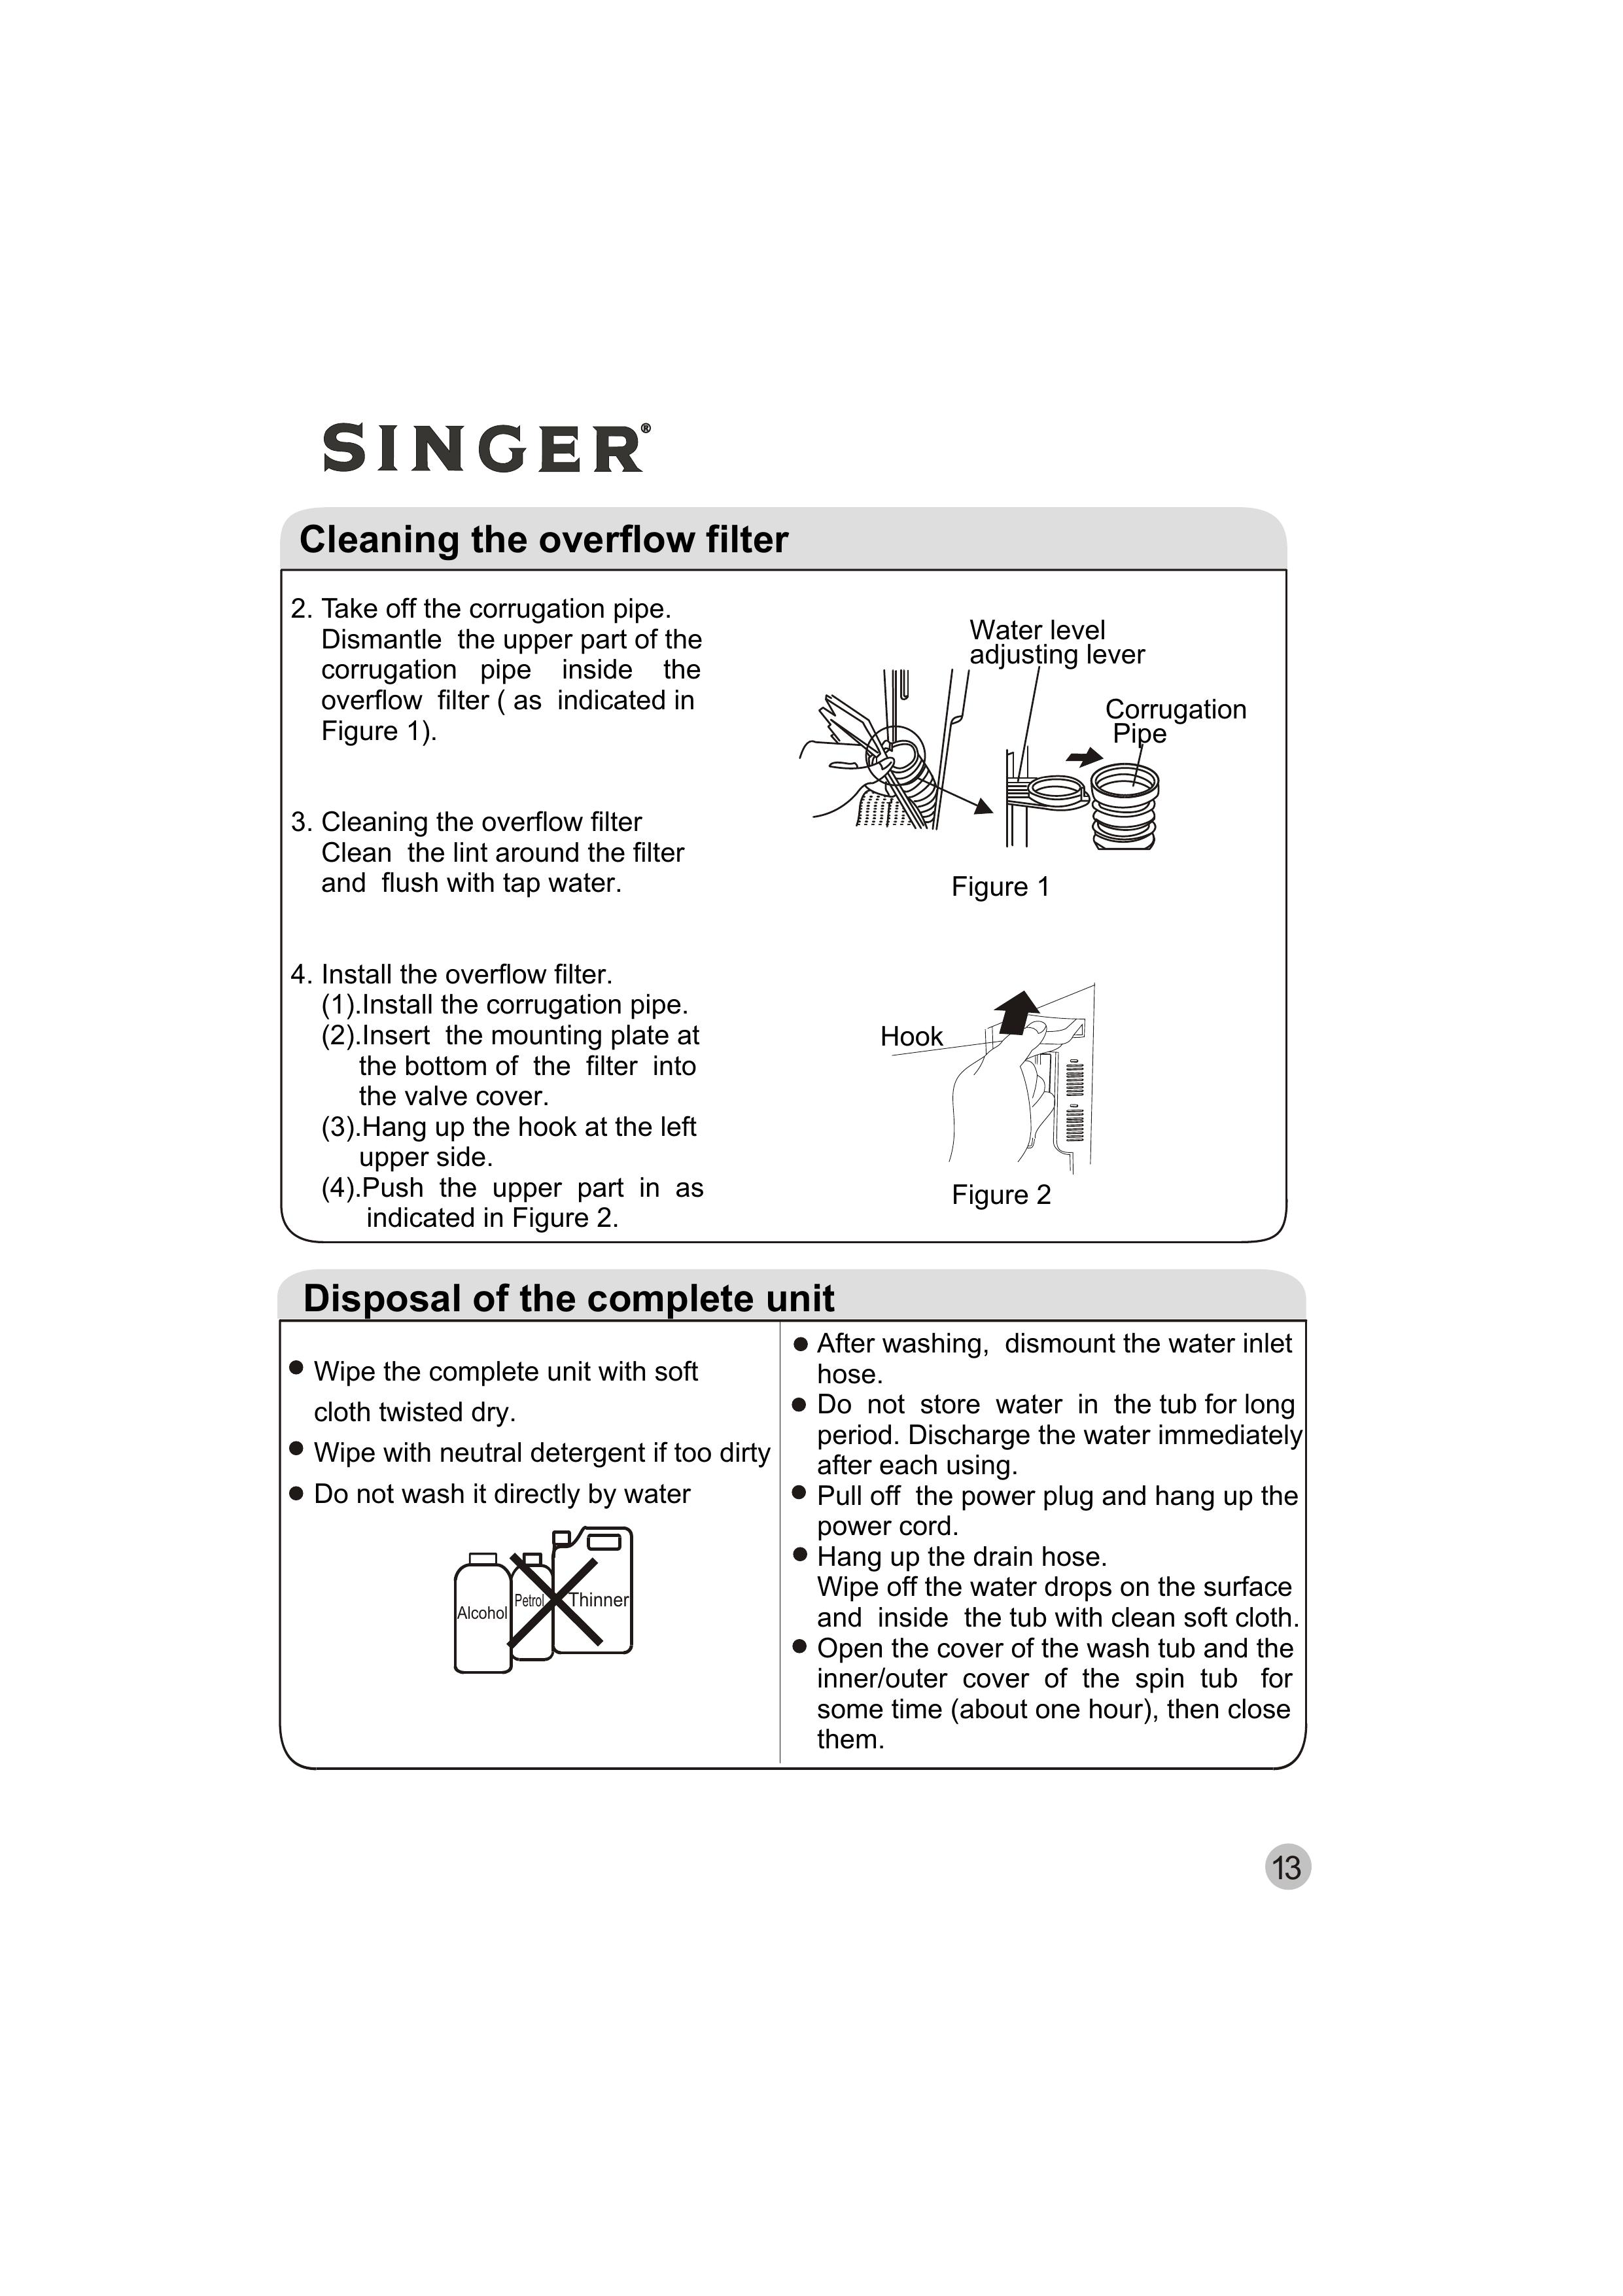 Singer WT5113 Washer/Dryer User Manual (Page 14)